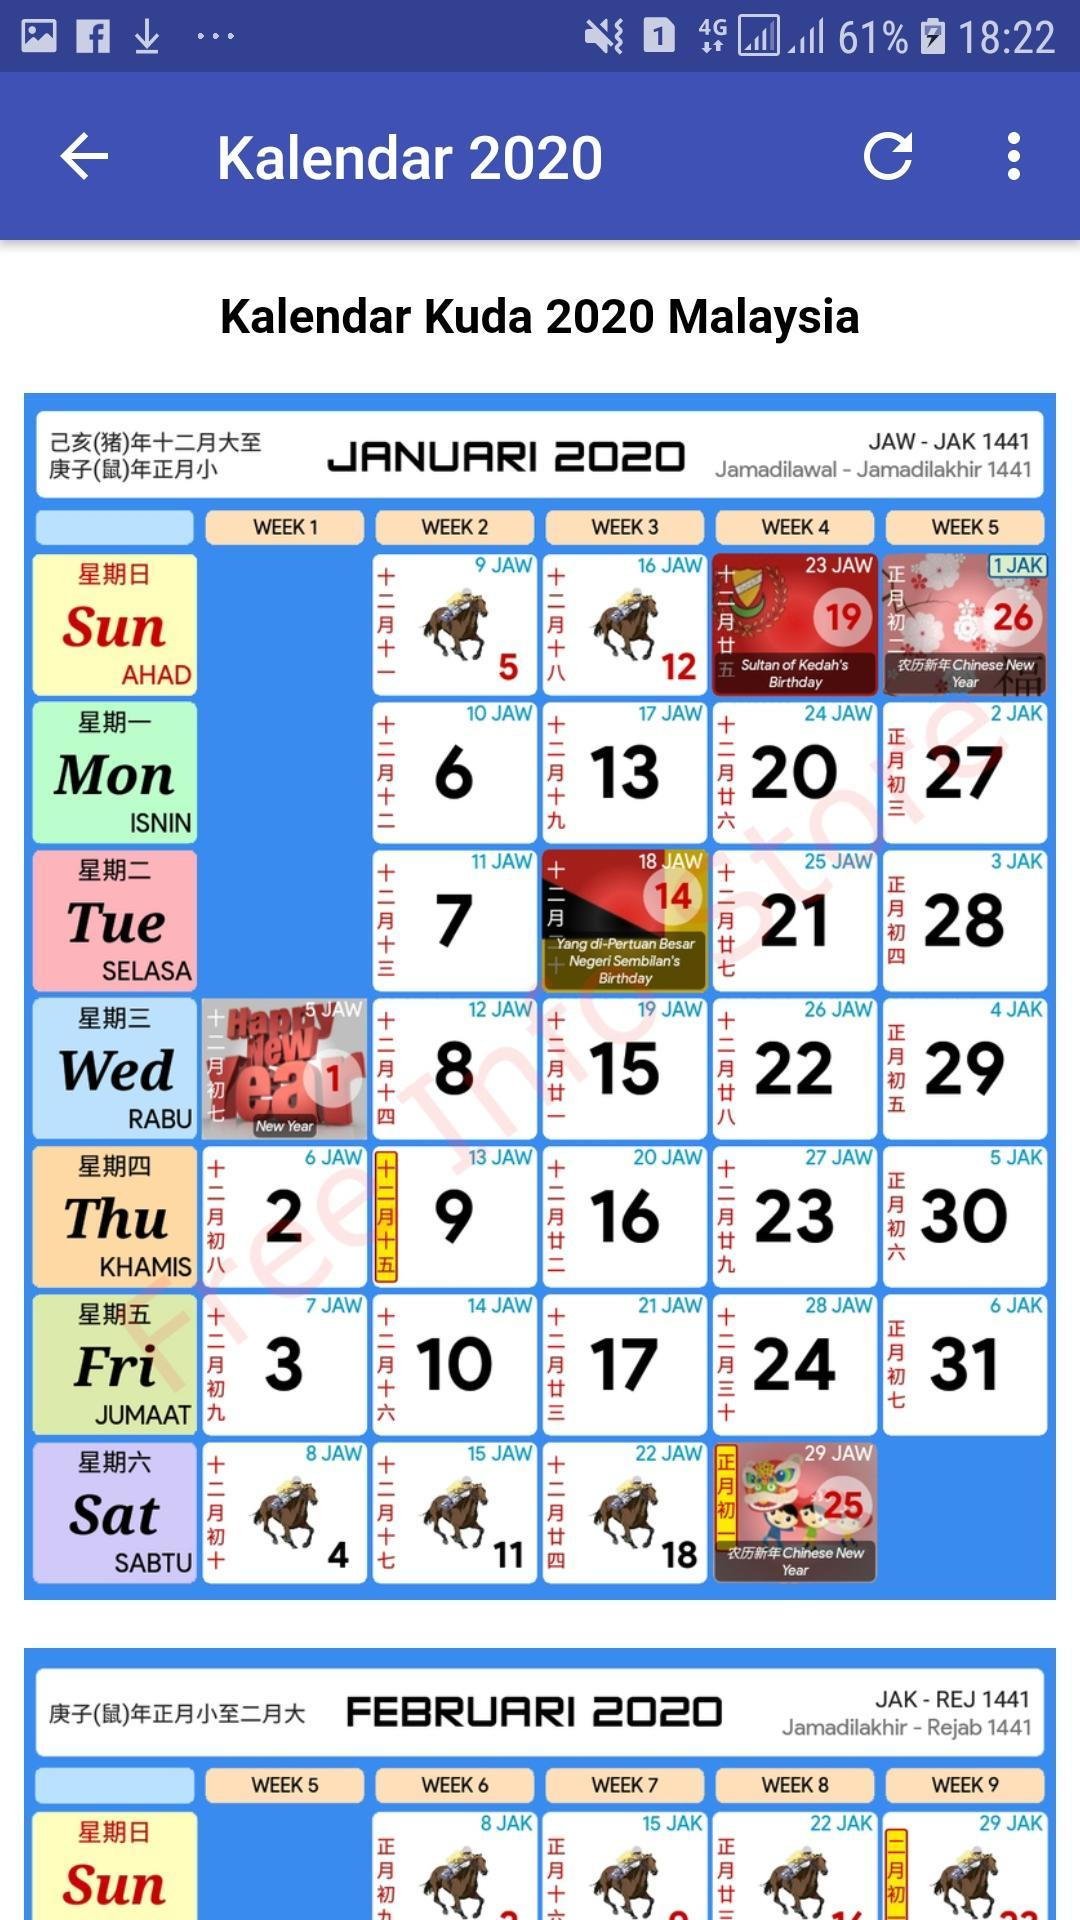 Kalendar Kuda 2020 For Android  Apk Download intended for Kalendar Kuda Tahun 2020